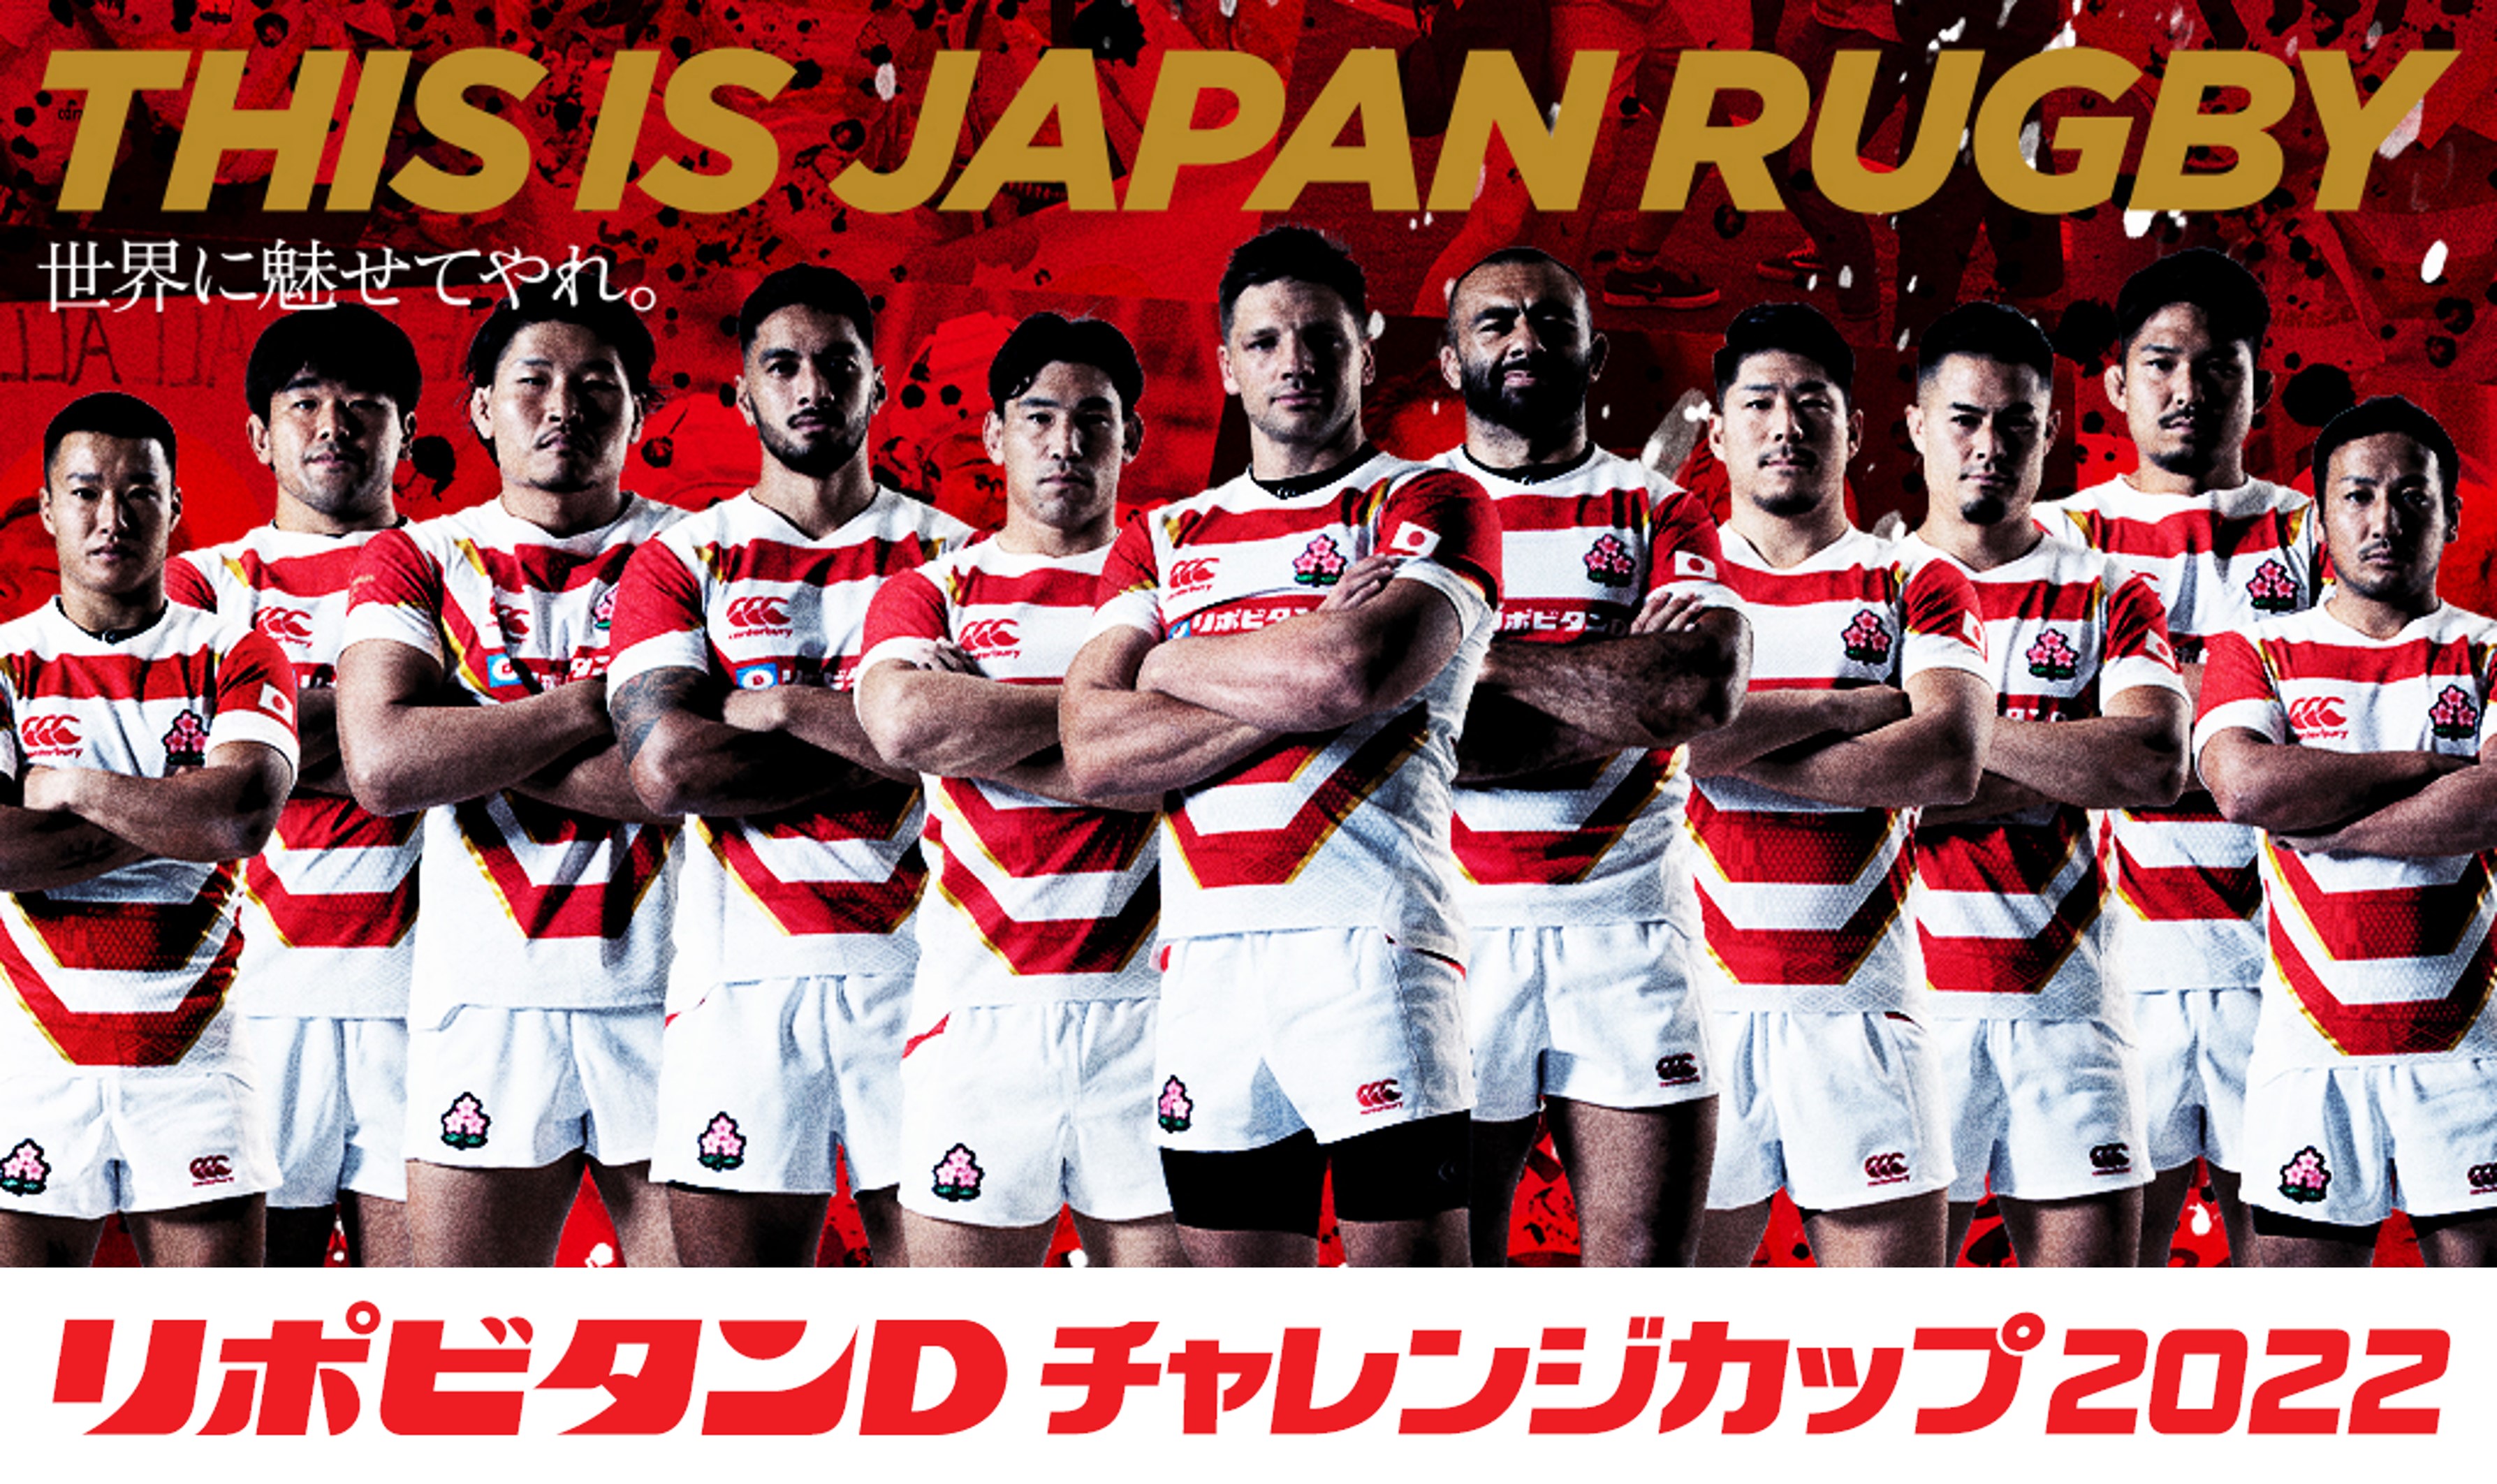 Japan National Rugby Football Union team ©JRFU, 2022